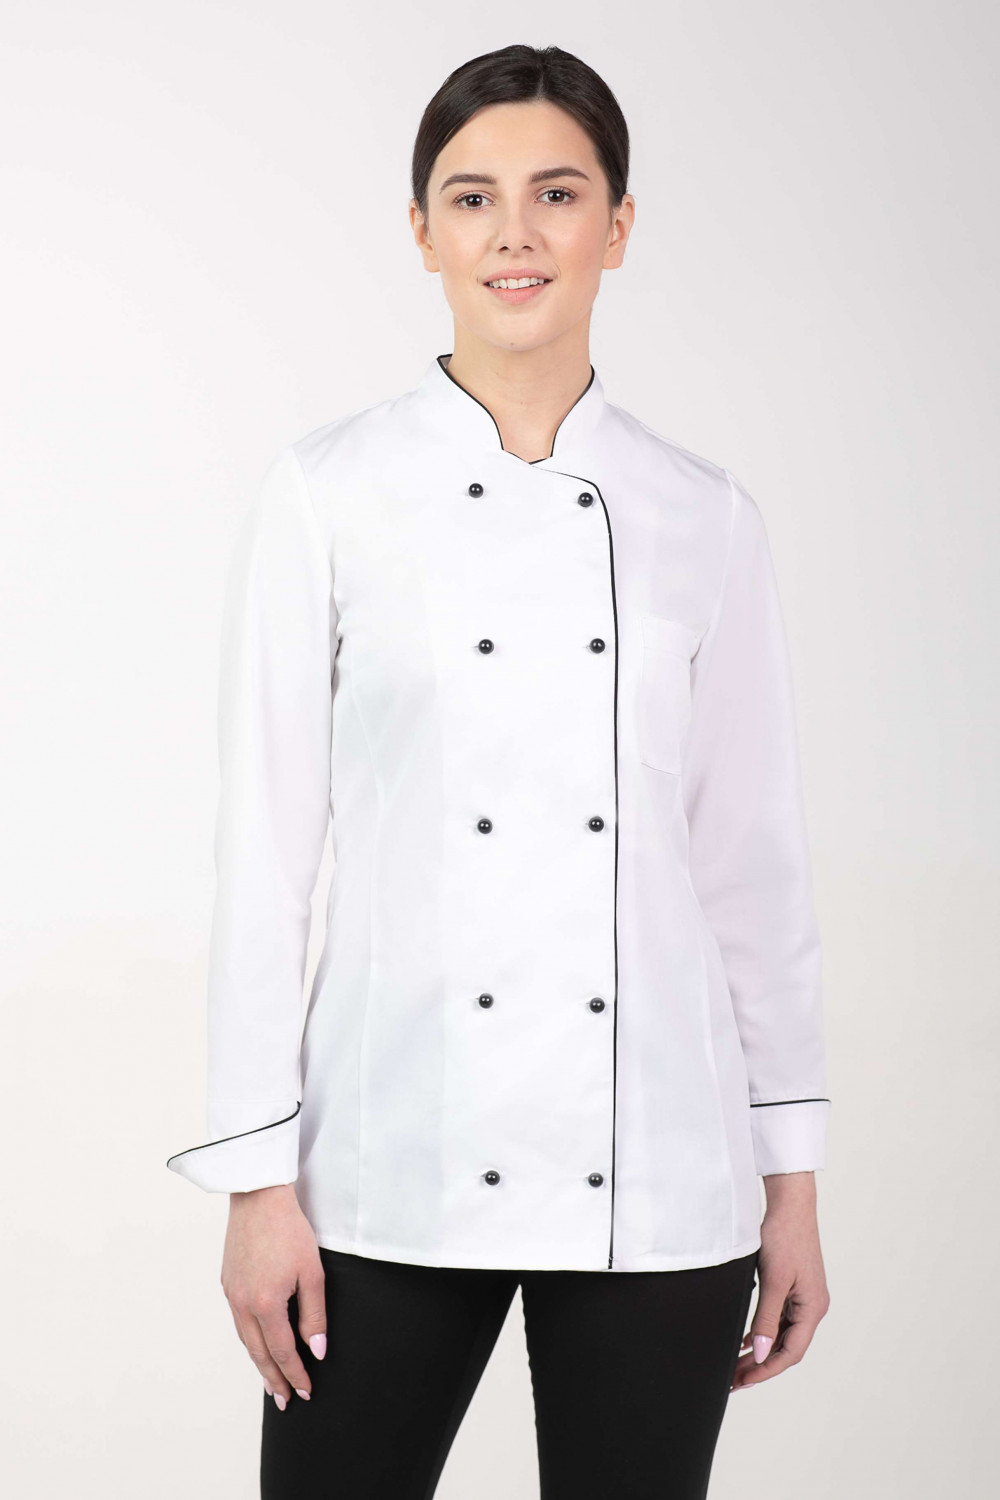 M-314 Bluza kucharska damska biała dwurzędowa na guziki fartuch kucharski